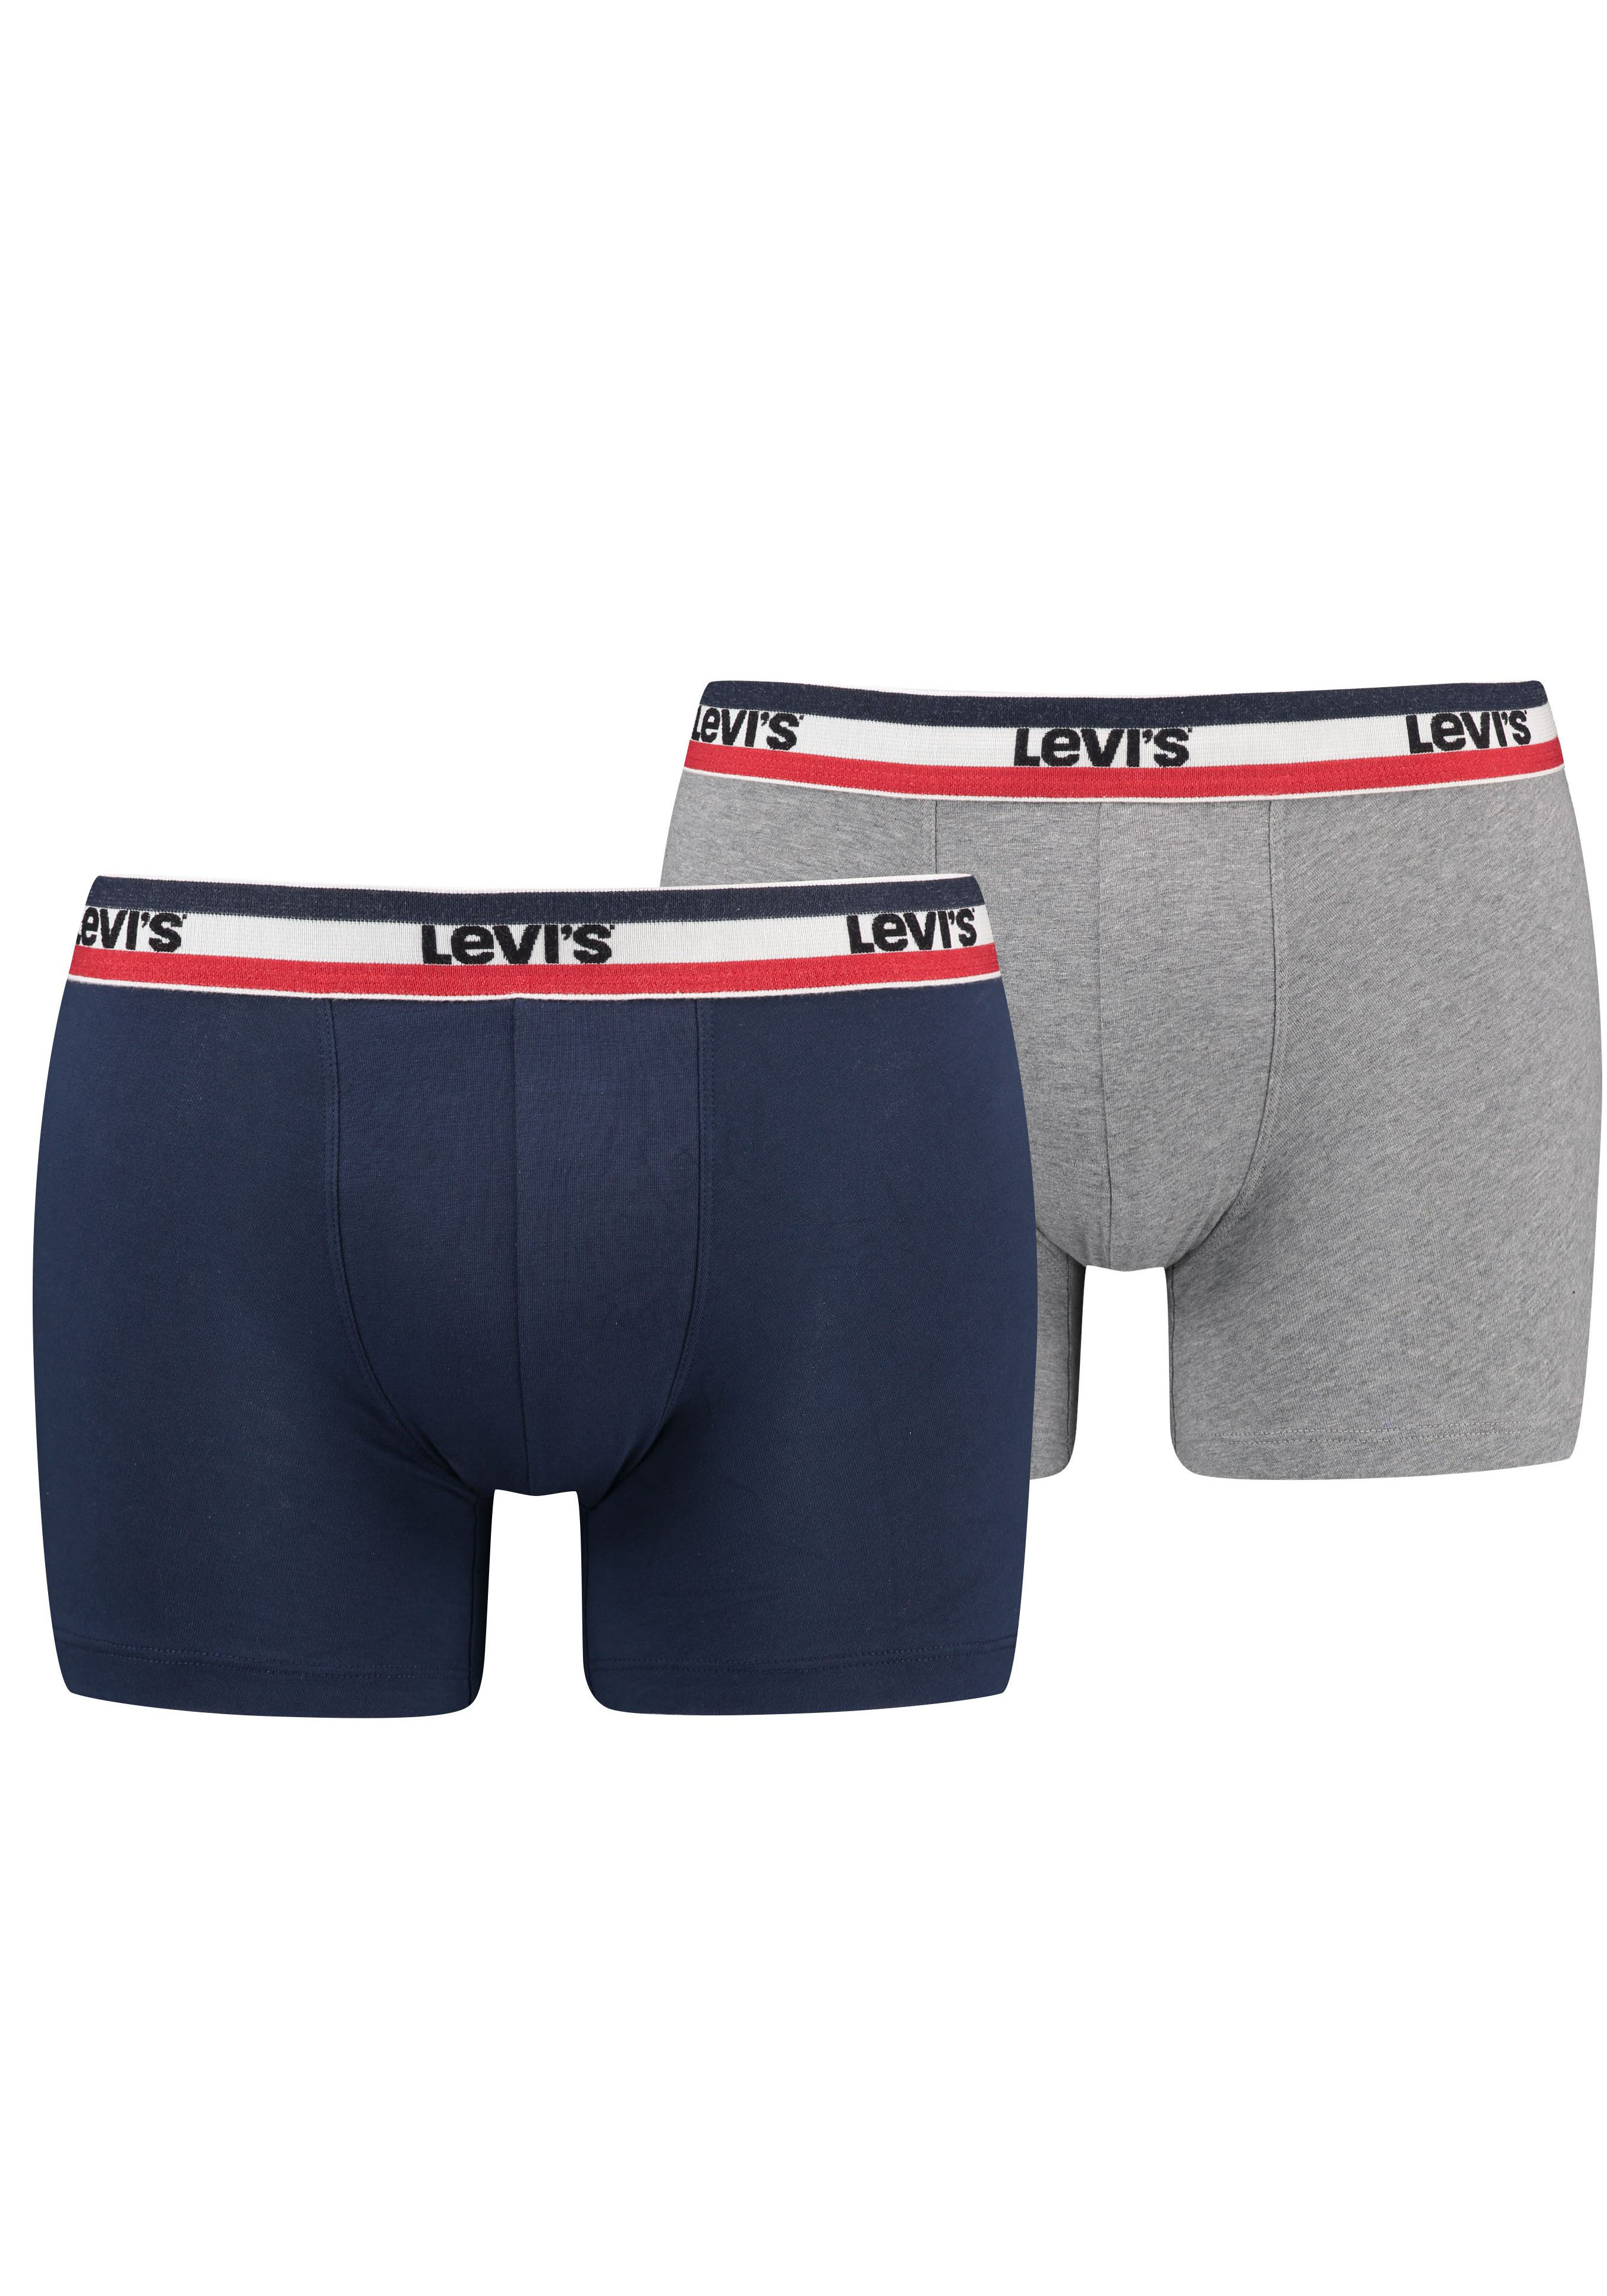 Levi's Mens Men's Sportswear Logo Briefs (3 Pack) Boxer Shorts, Navy/Grey Melange, XXL